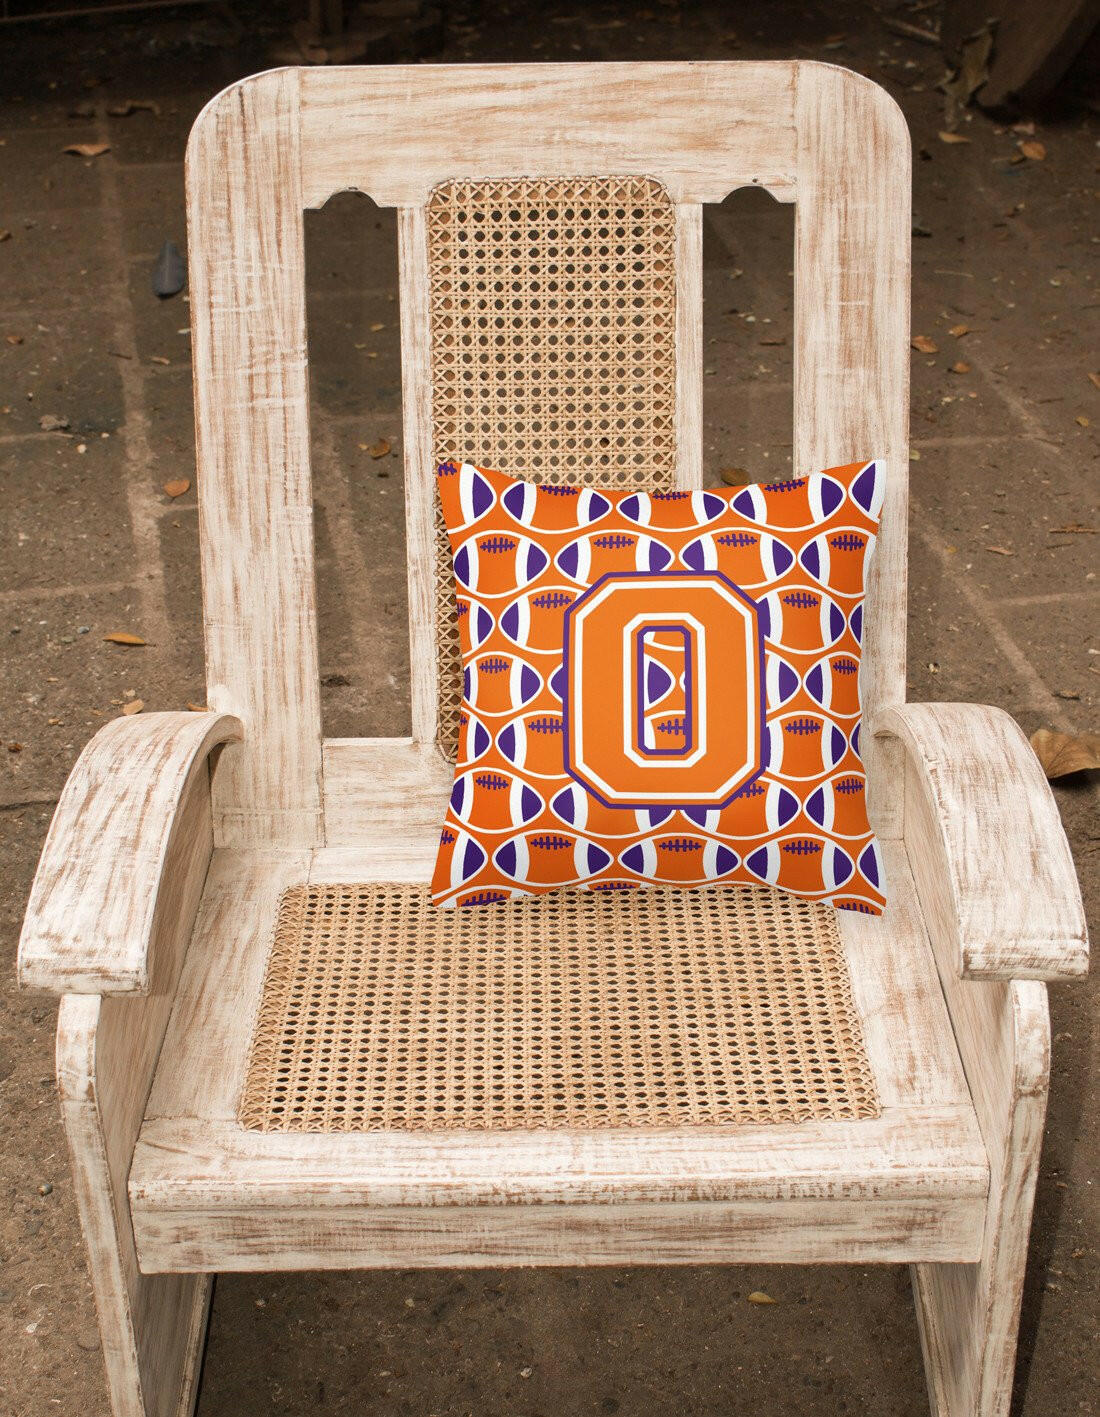 Letter O Football Orange, White and Regalia Fabric Decorative Pillow CJ1072-OPW1414 by Caroline's Treasures